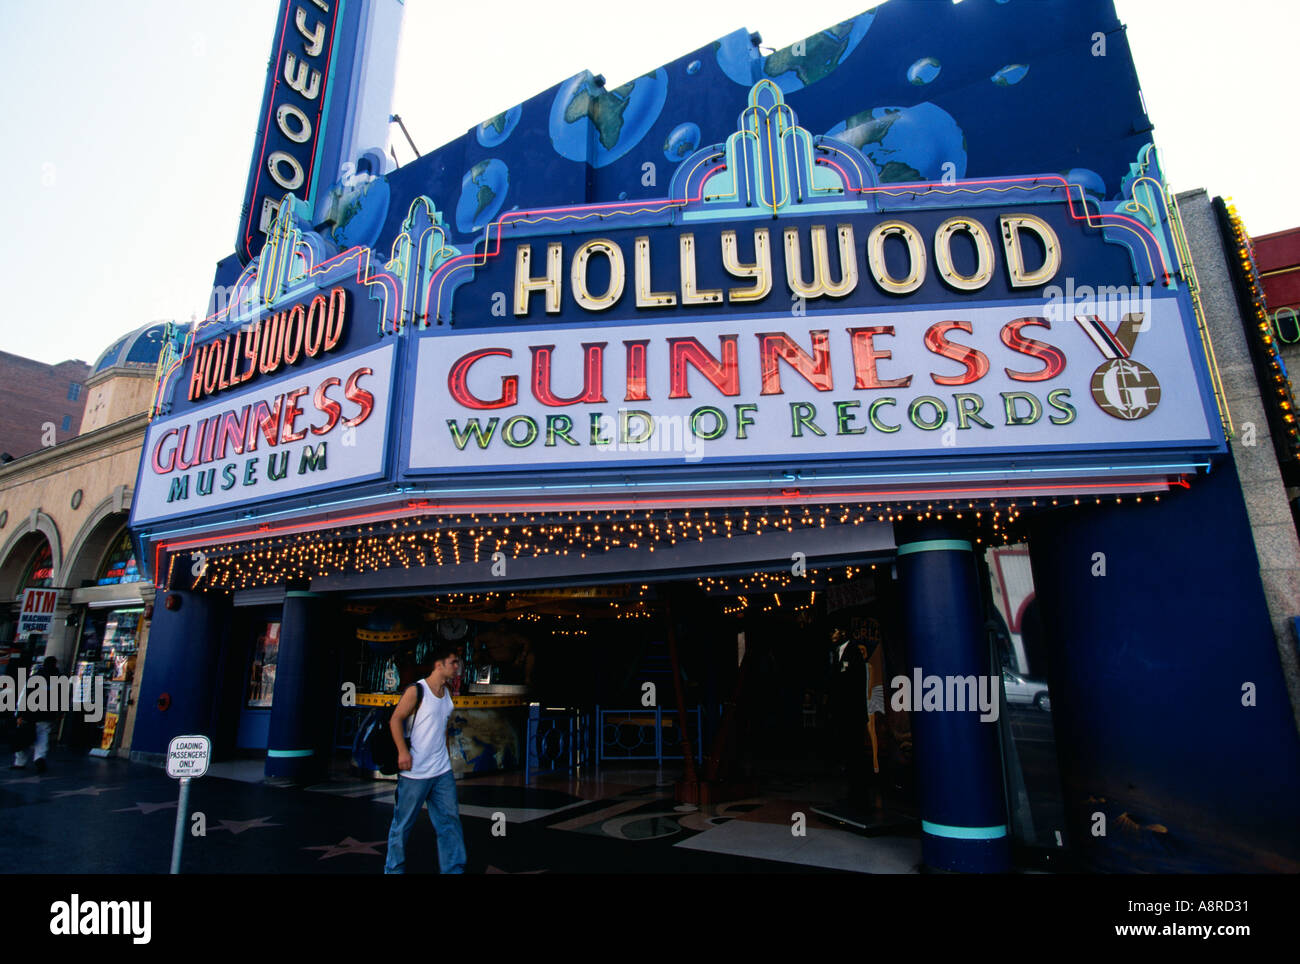 Guinness World Records Museum Namen über dem Eingang am Hollywood Boulevard Los  Angeles Kalifornien USA Stockfotografie - Alamy